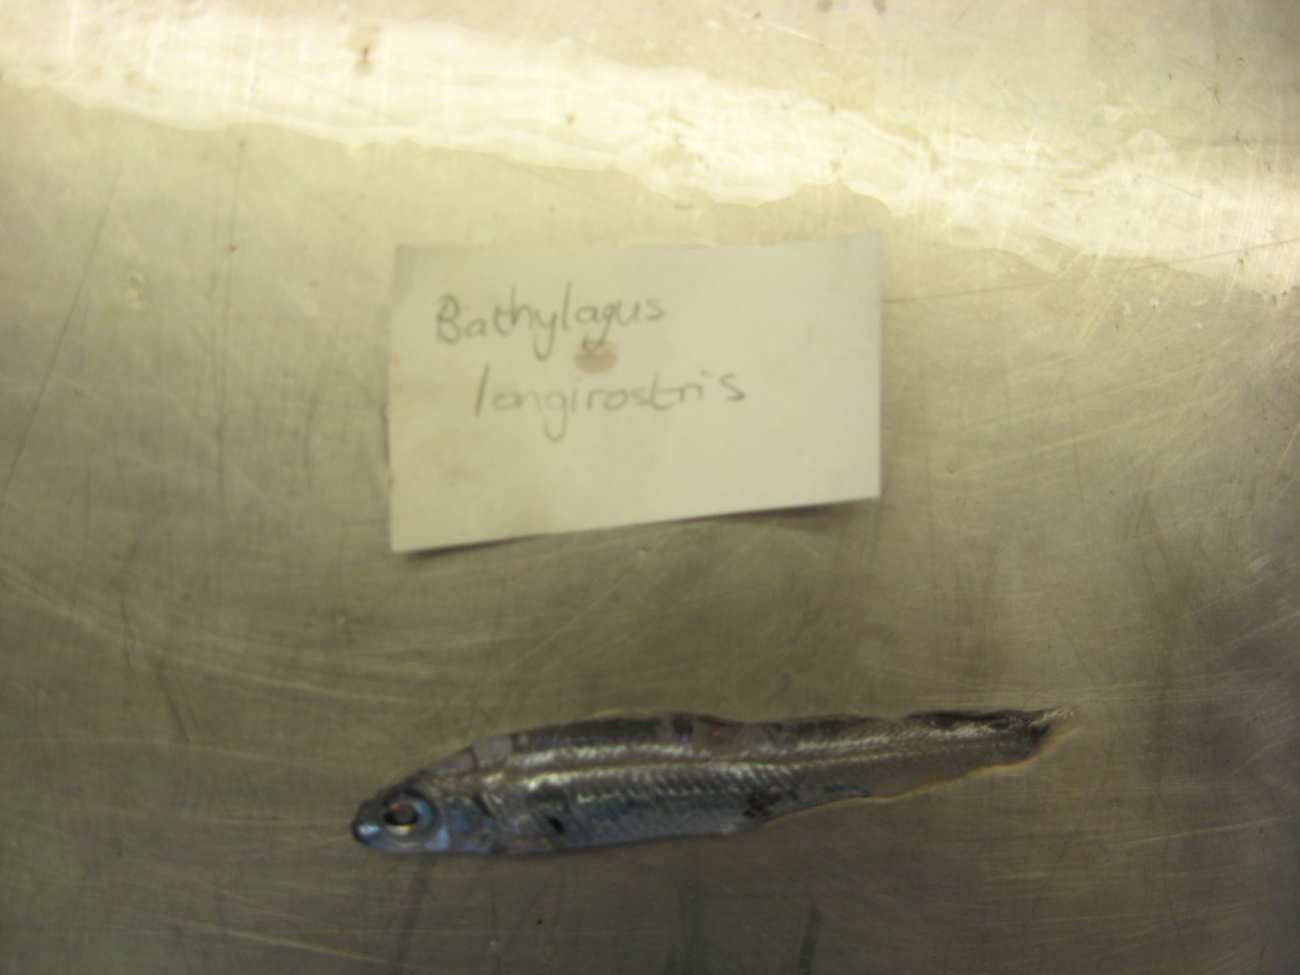 Longsnout blacksmelt (Dolicholagus longirostris has replaced the earliername of Bathylagus longirostris)